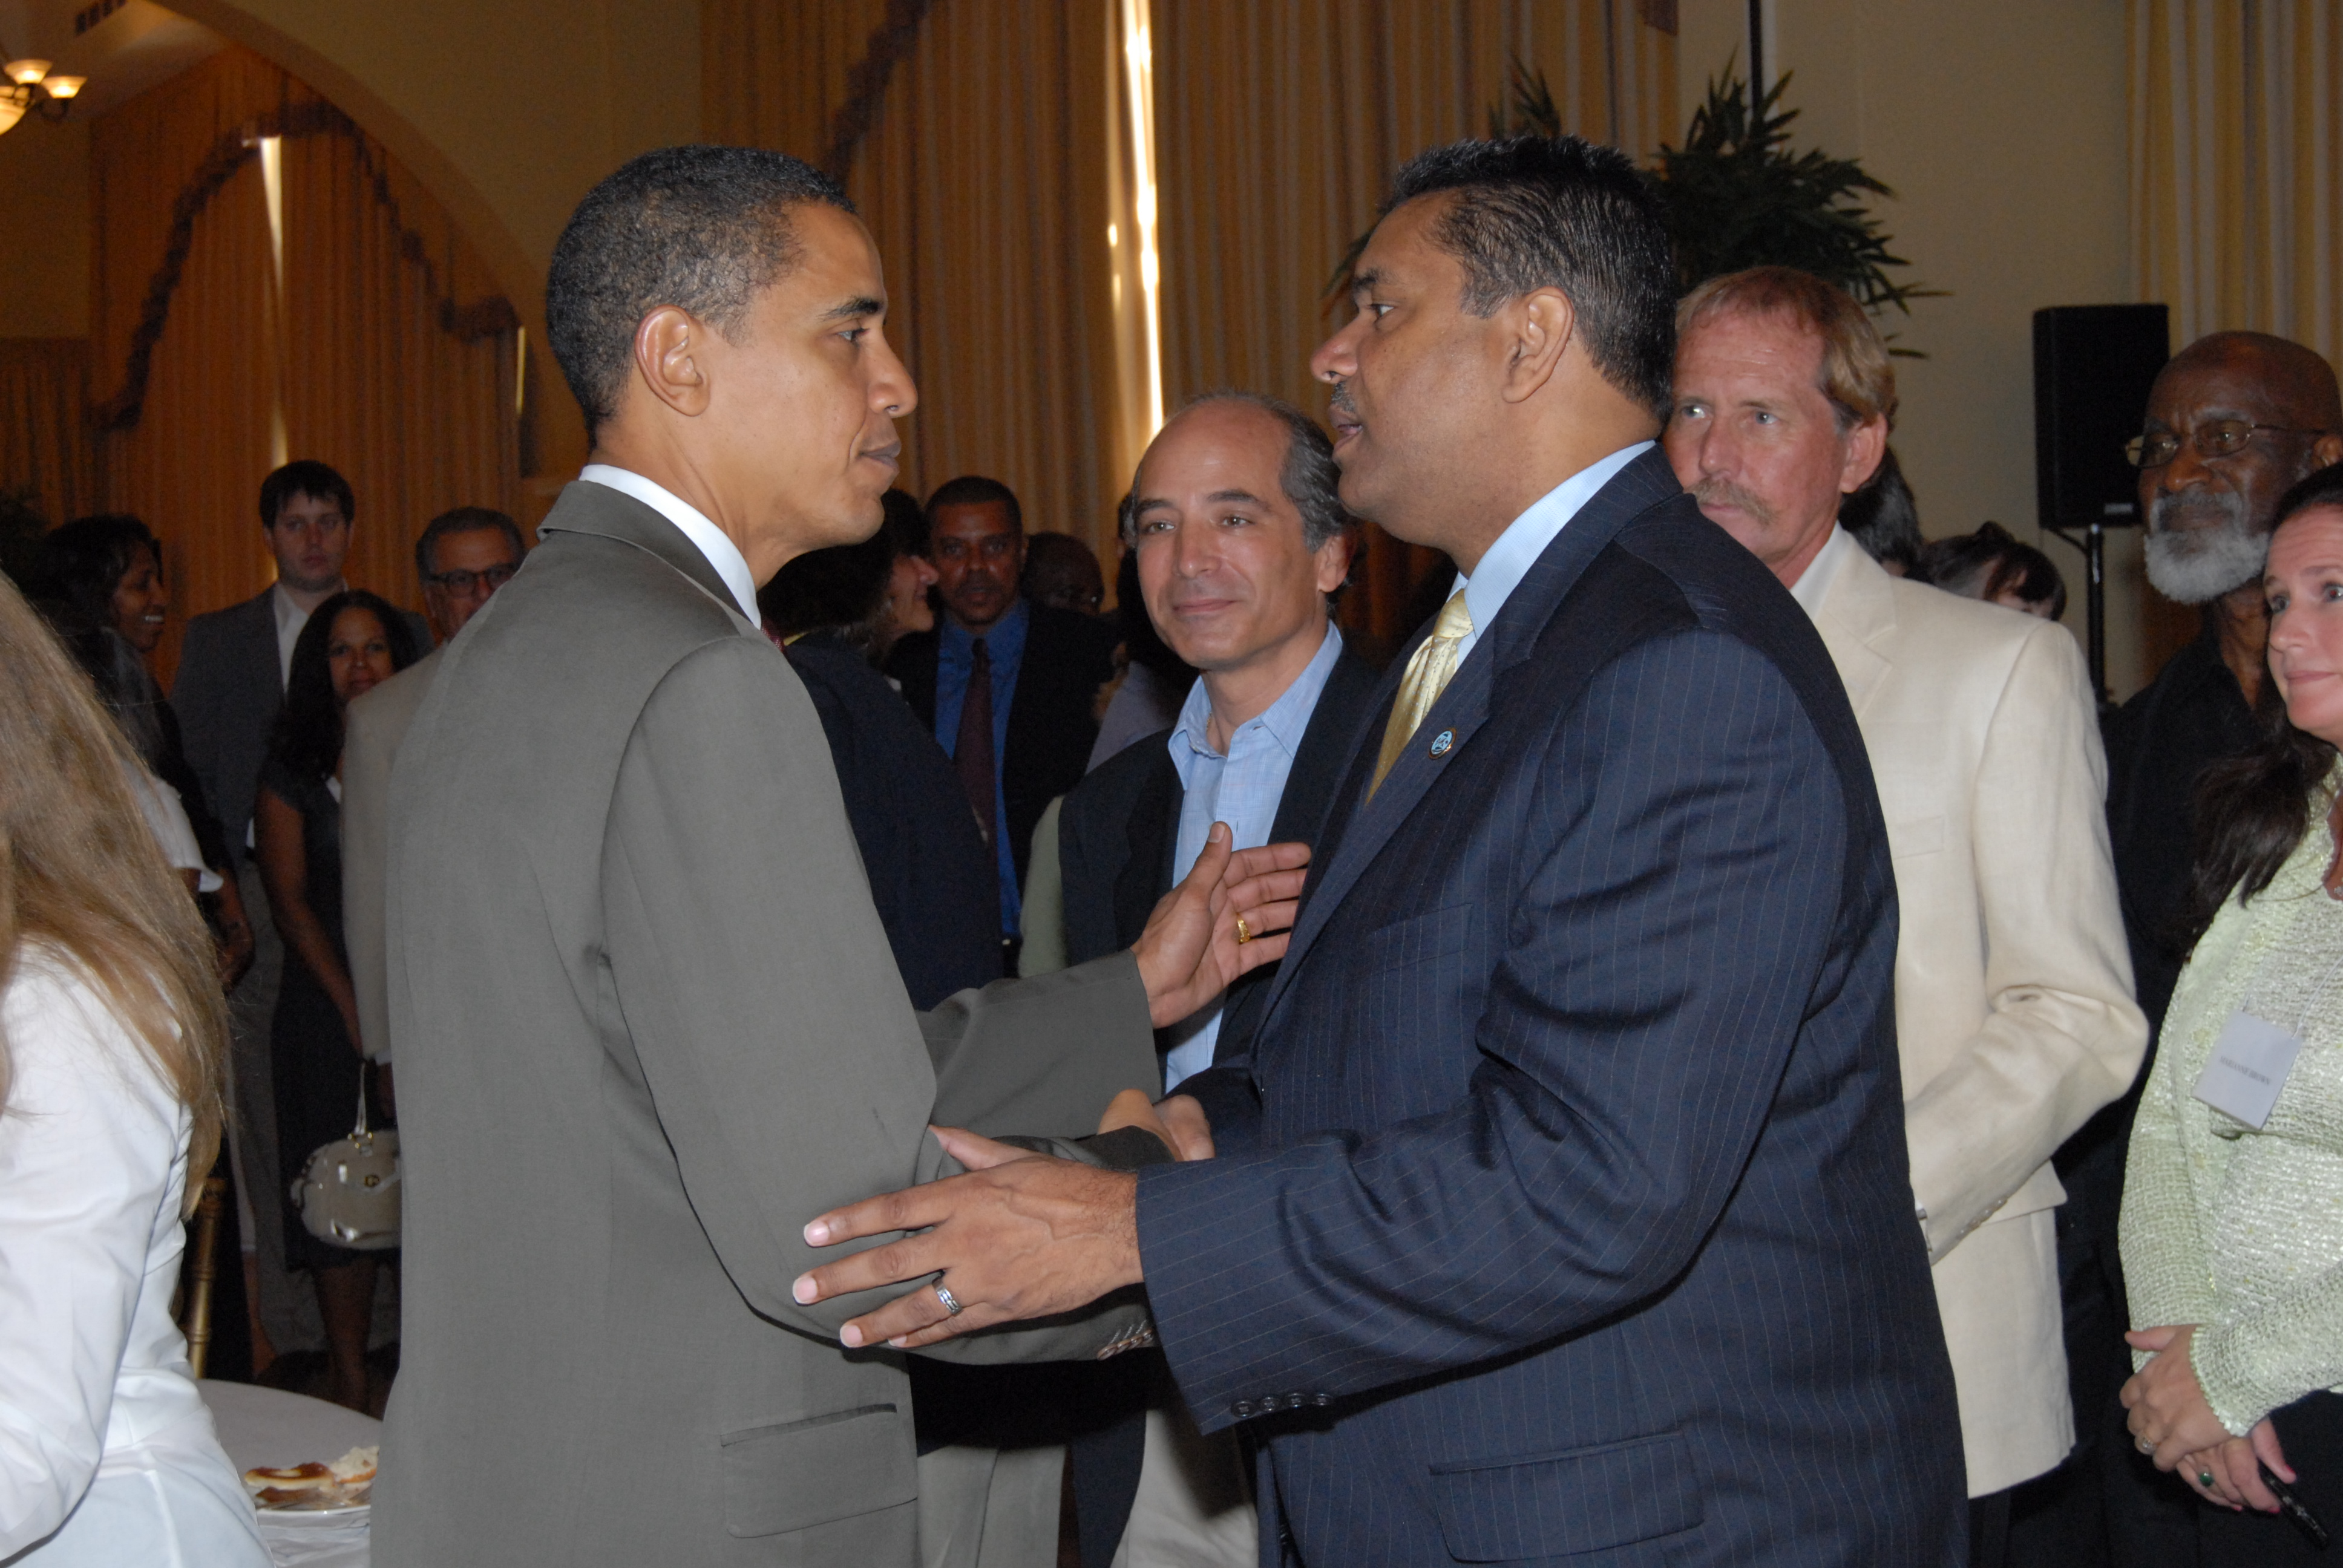 President Obama (left) being greeted by Gov. deJongh.